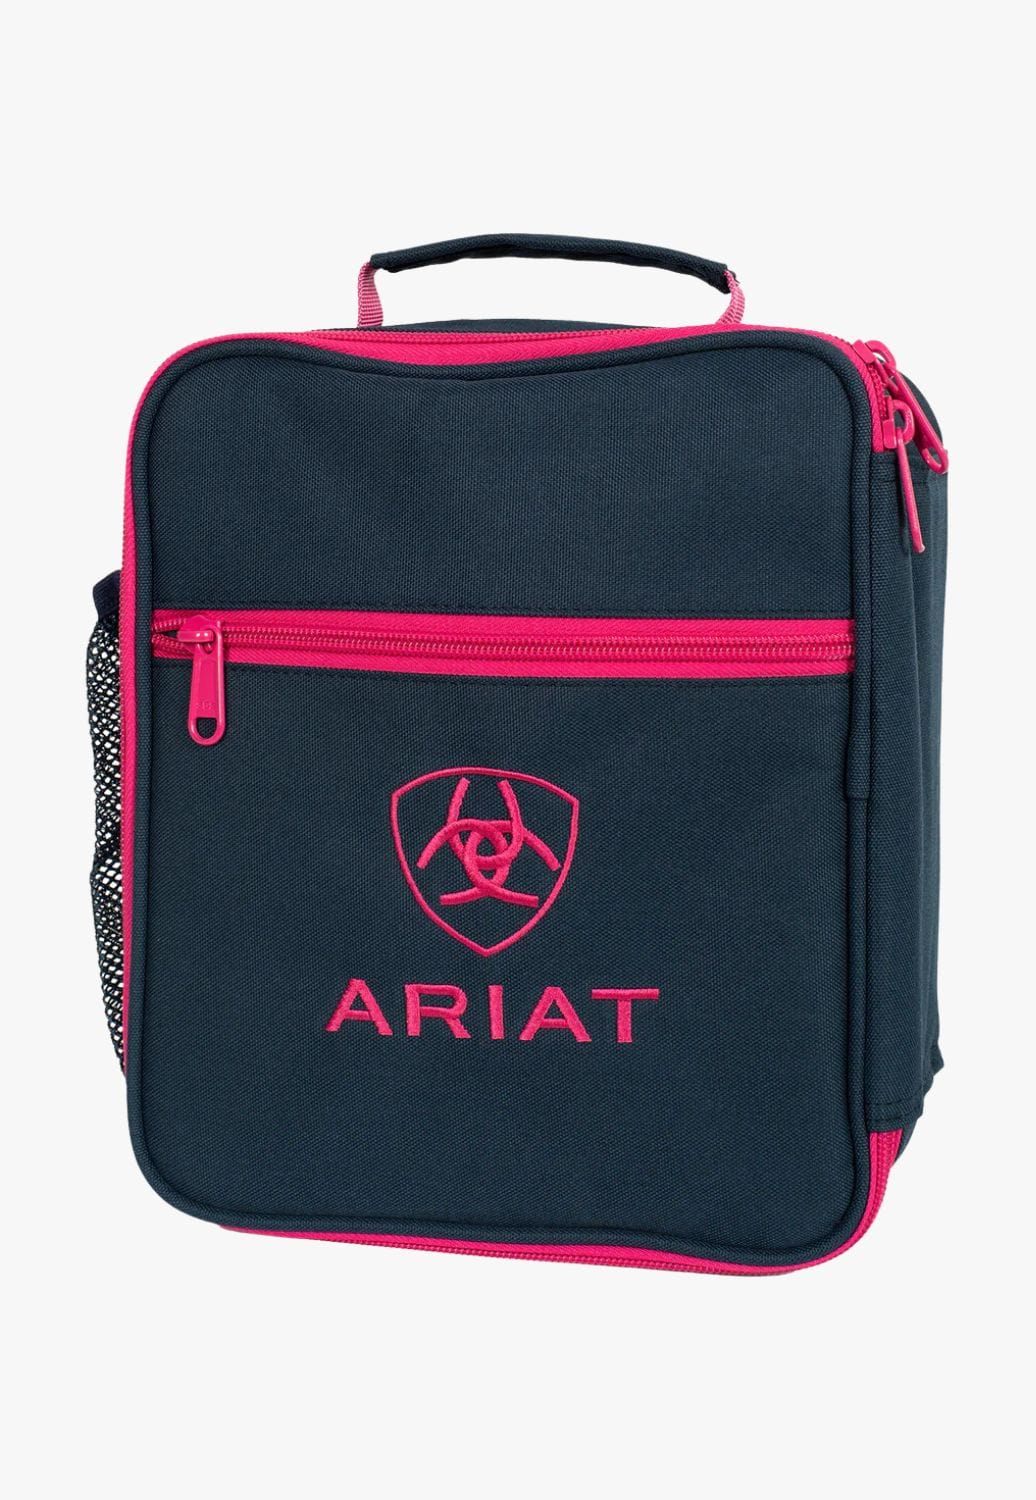 Ariat ACCESSORIES-General Pink/Navy Ariat Lunch Box